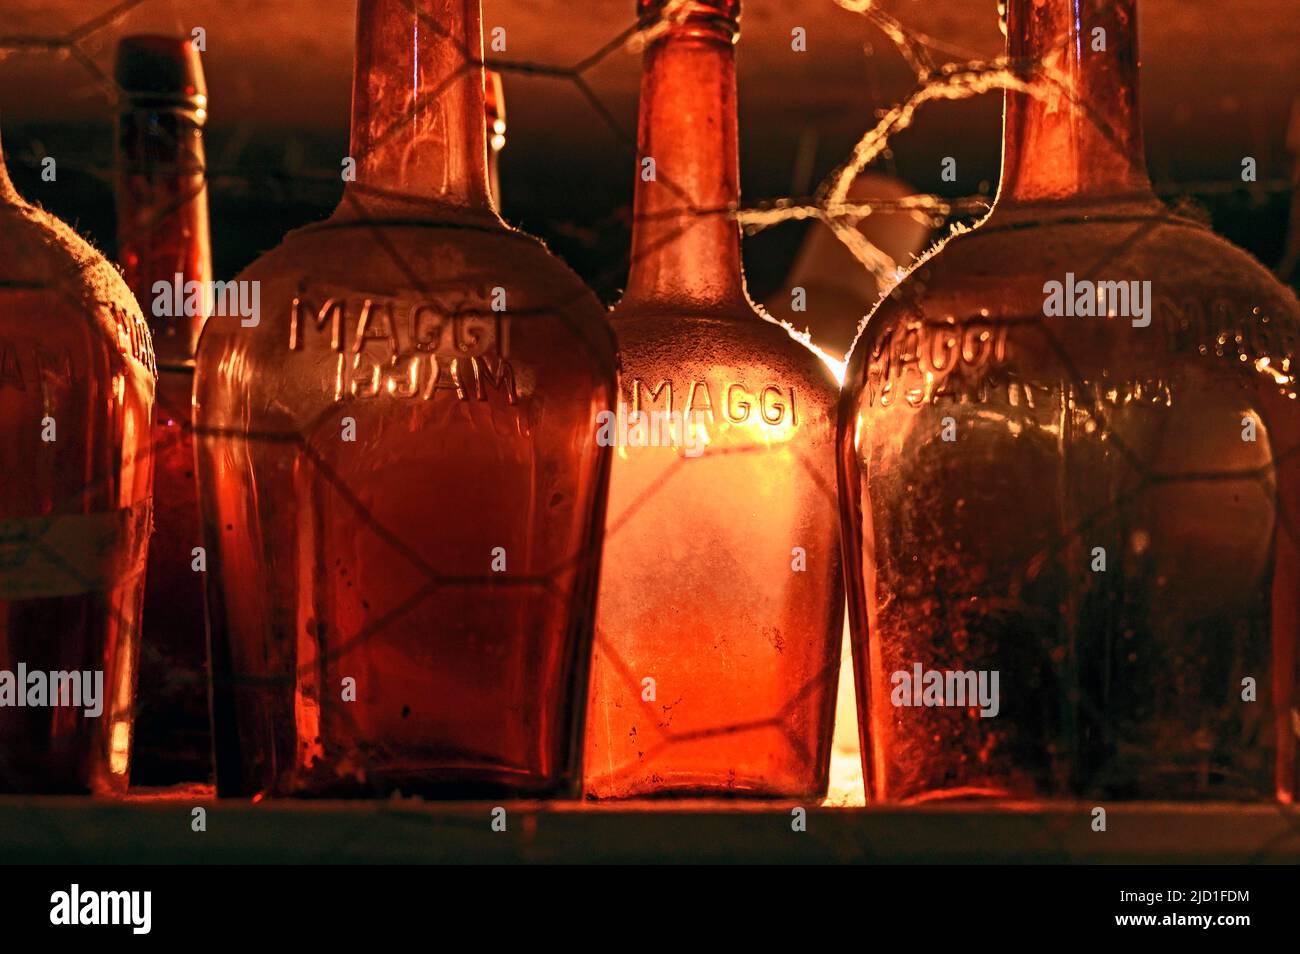 Vecchie bottiglie Maggi, vetrerie Schmidsfelden, Allgaeu, Baviera, Germania Foto Stock